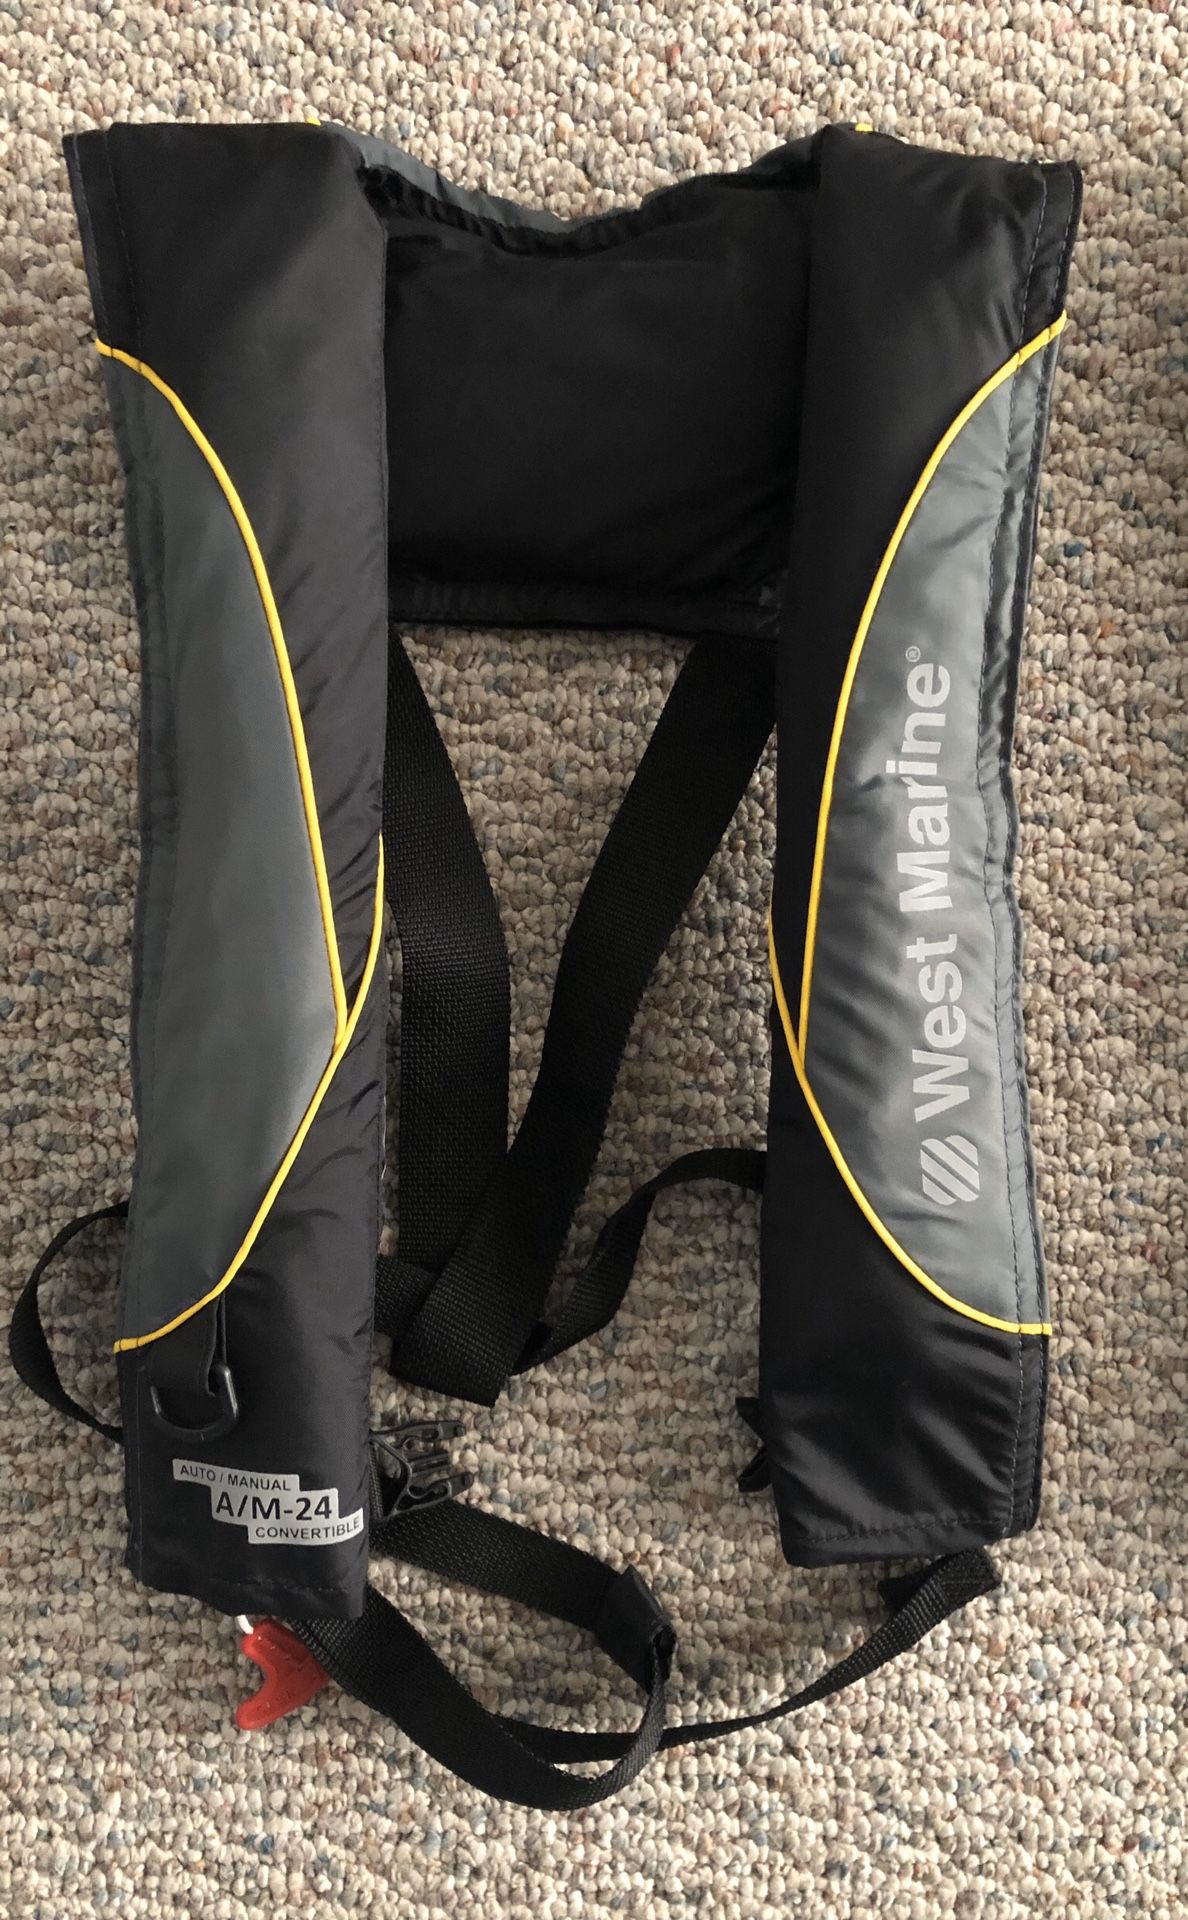 West Marine Inflatable Life Vests